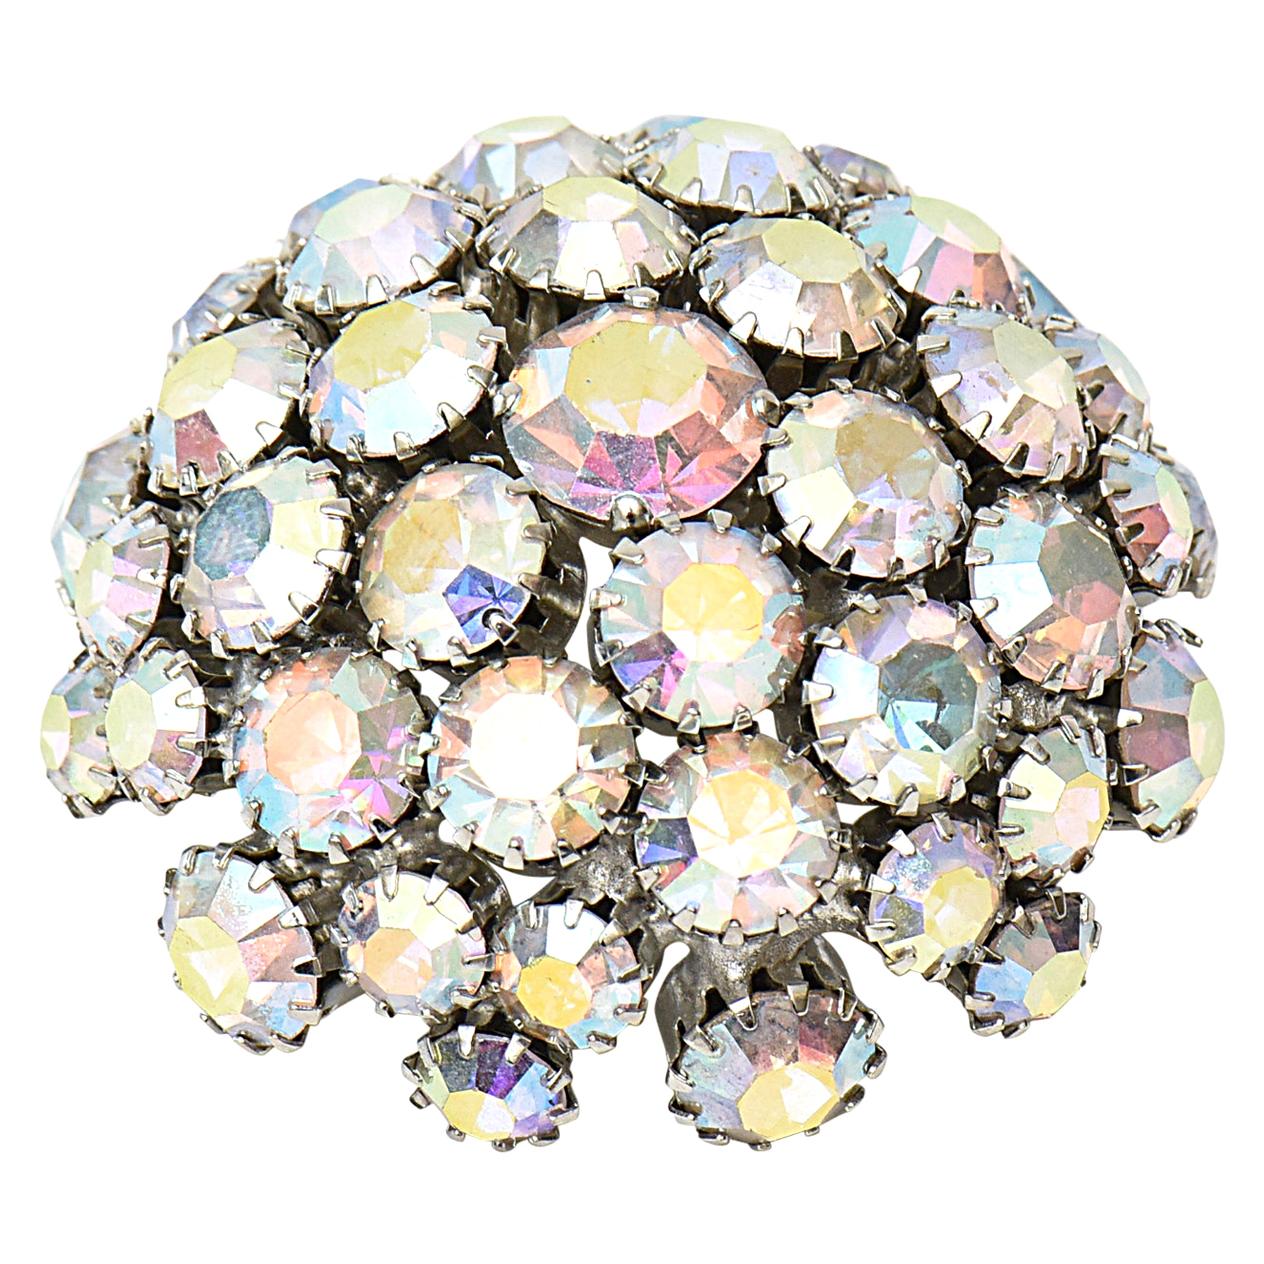 Warner Bora Aurealis Crystal Dome Vintage Pin Brooch Signed